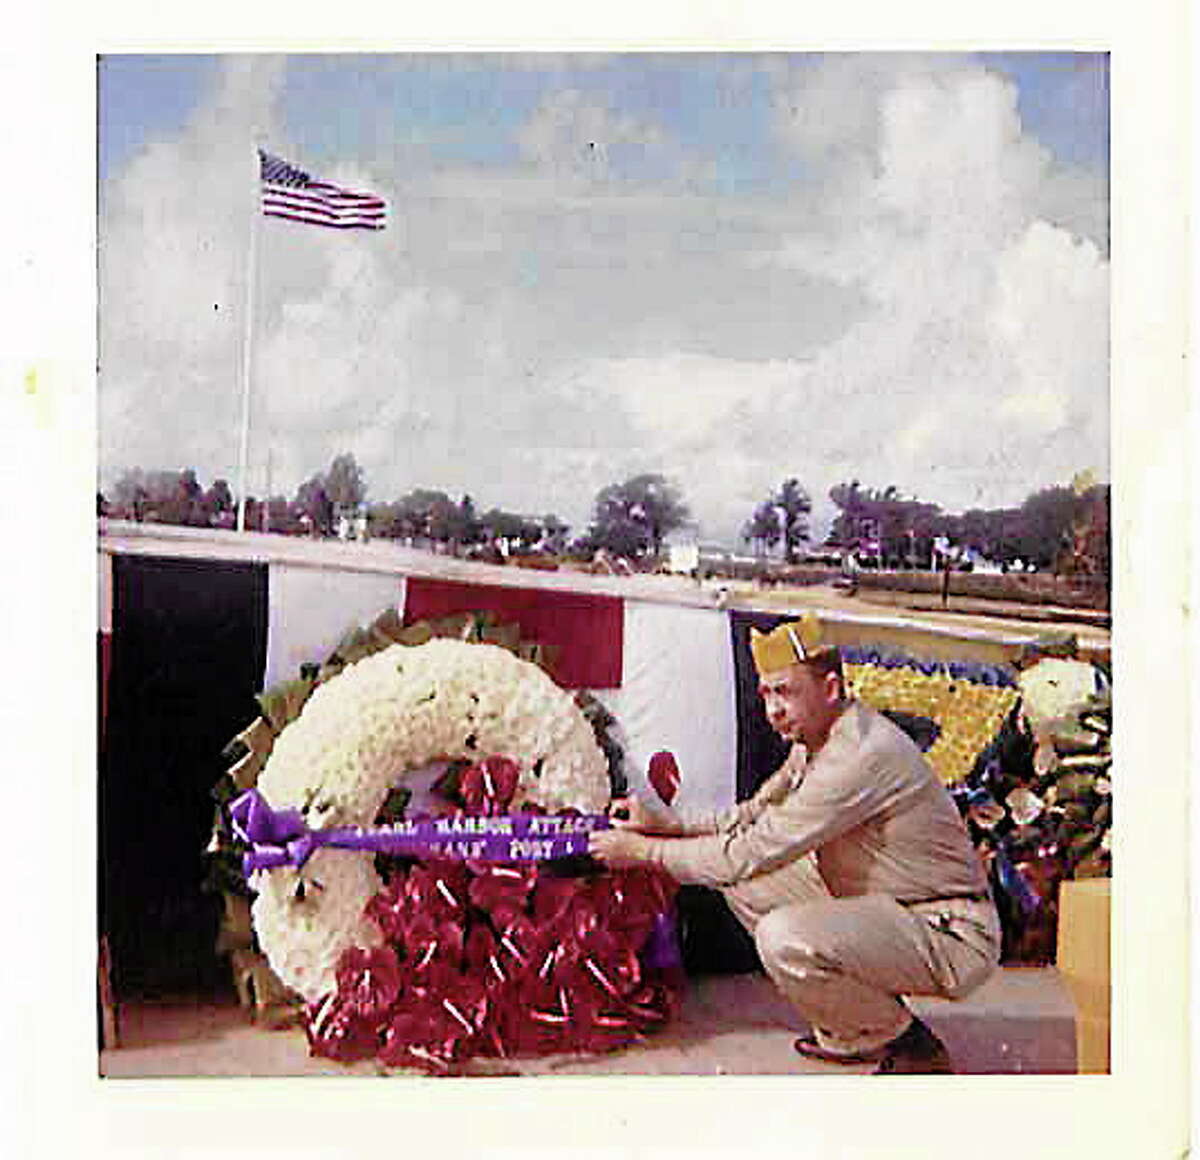 Joseph P. McDonald at the Arizona Memorial on Dec. 7, 1961.